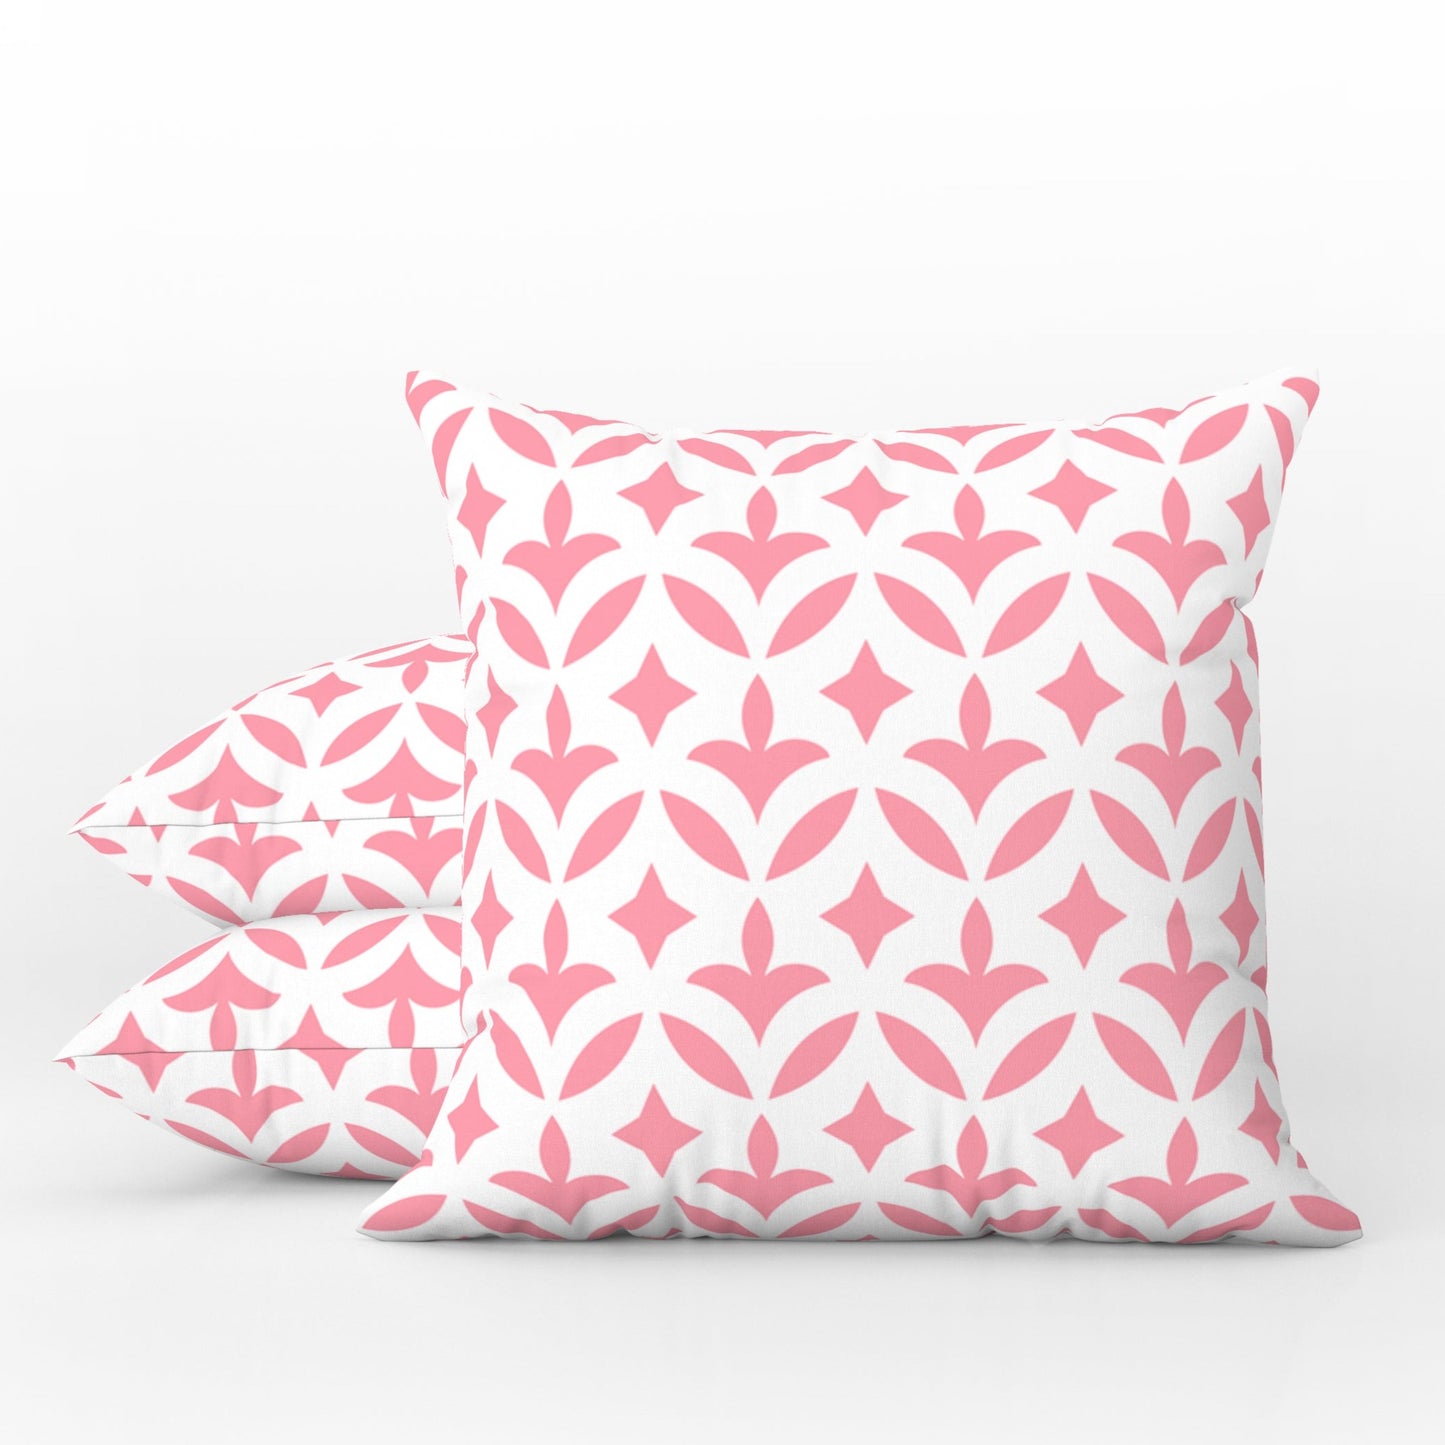 Retro Floral Outdoor Pillows Pink & White